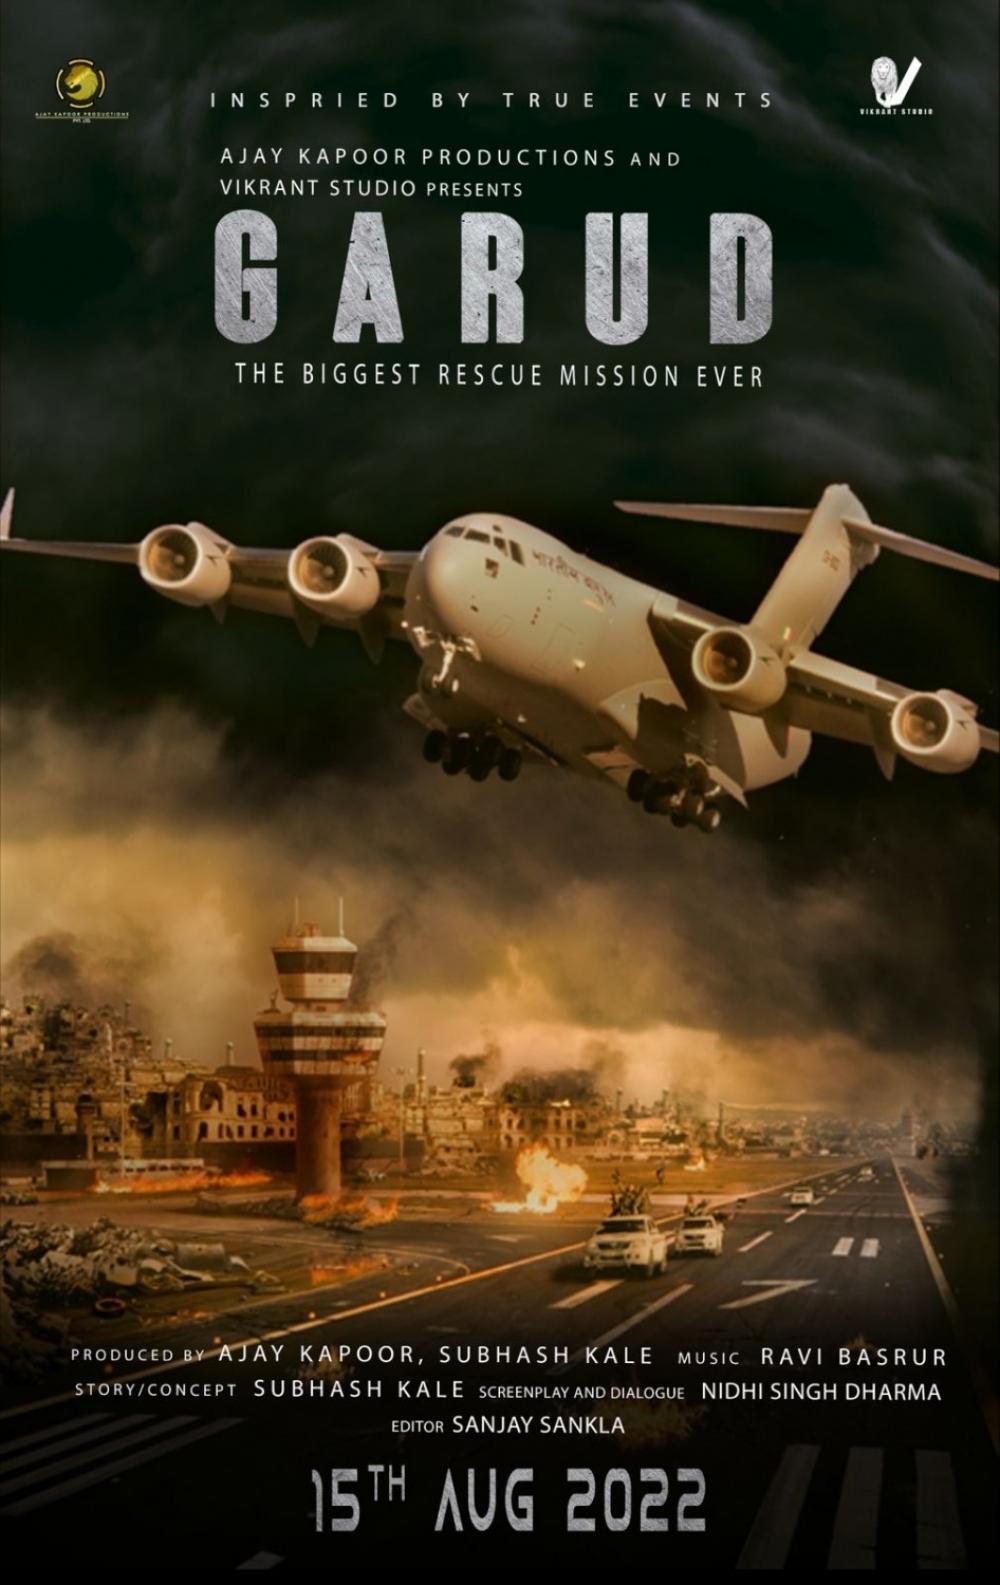 The Weekend Leader - Ajay Kapoor, Subhash Kale announce 'Garud' based on Afghan rescue crisis